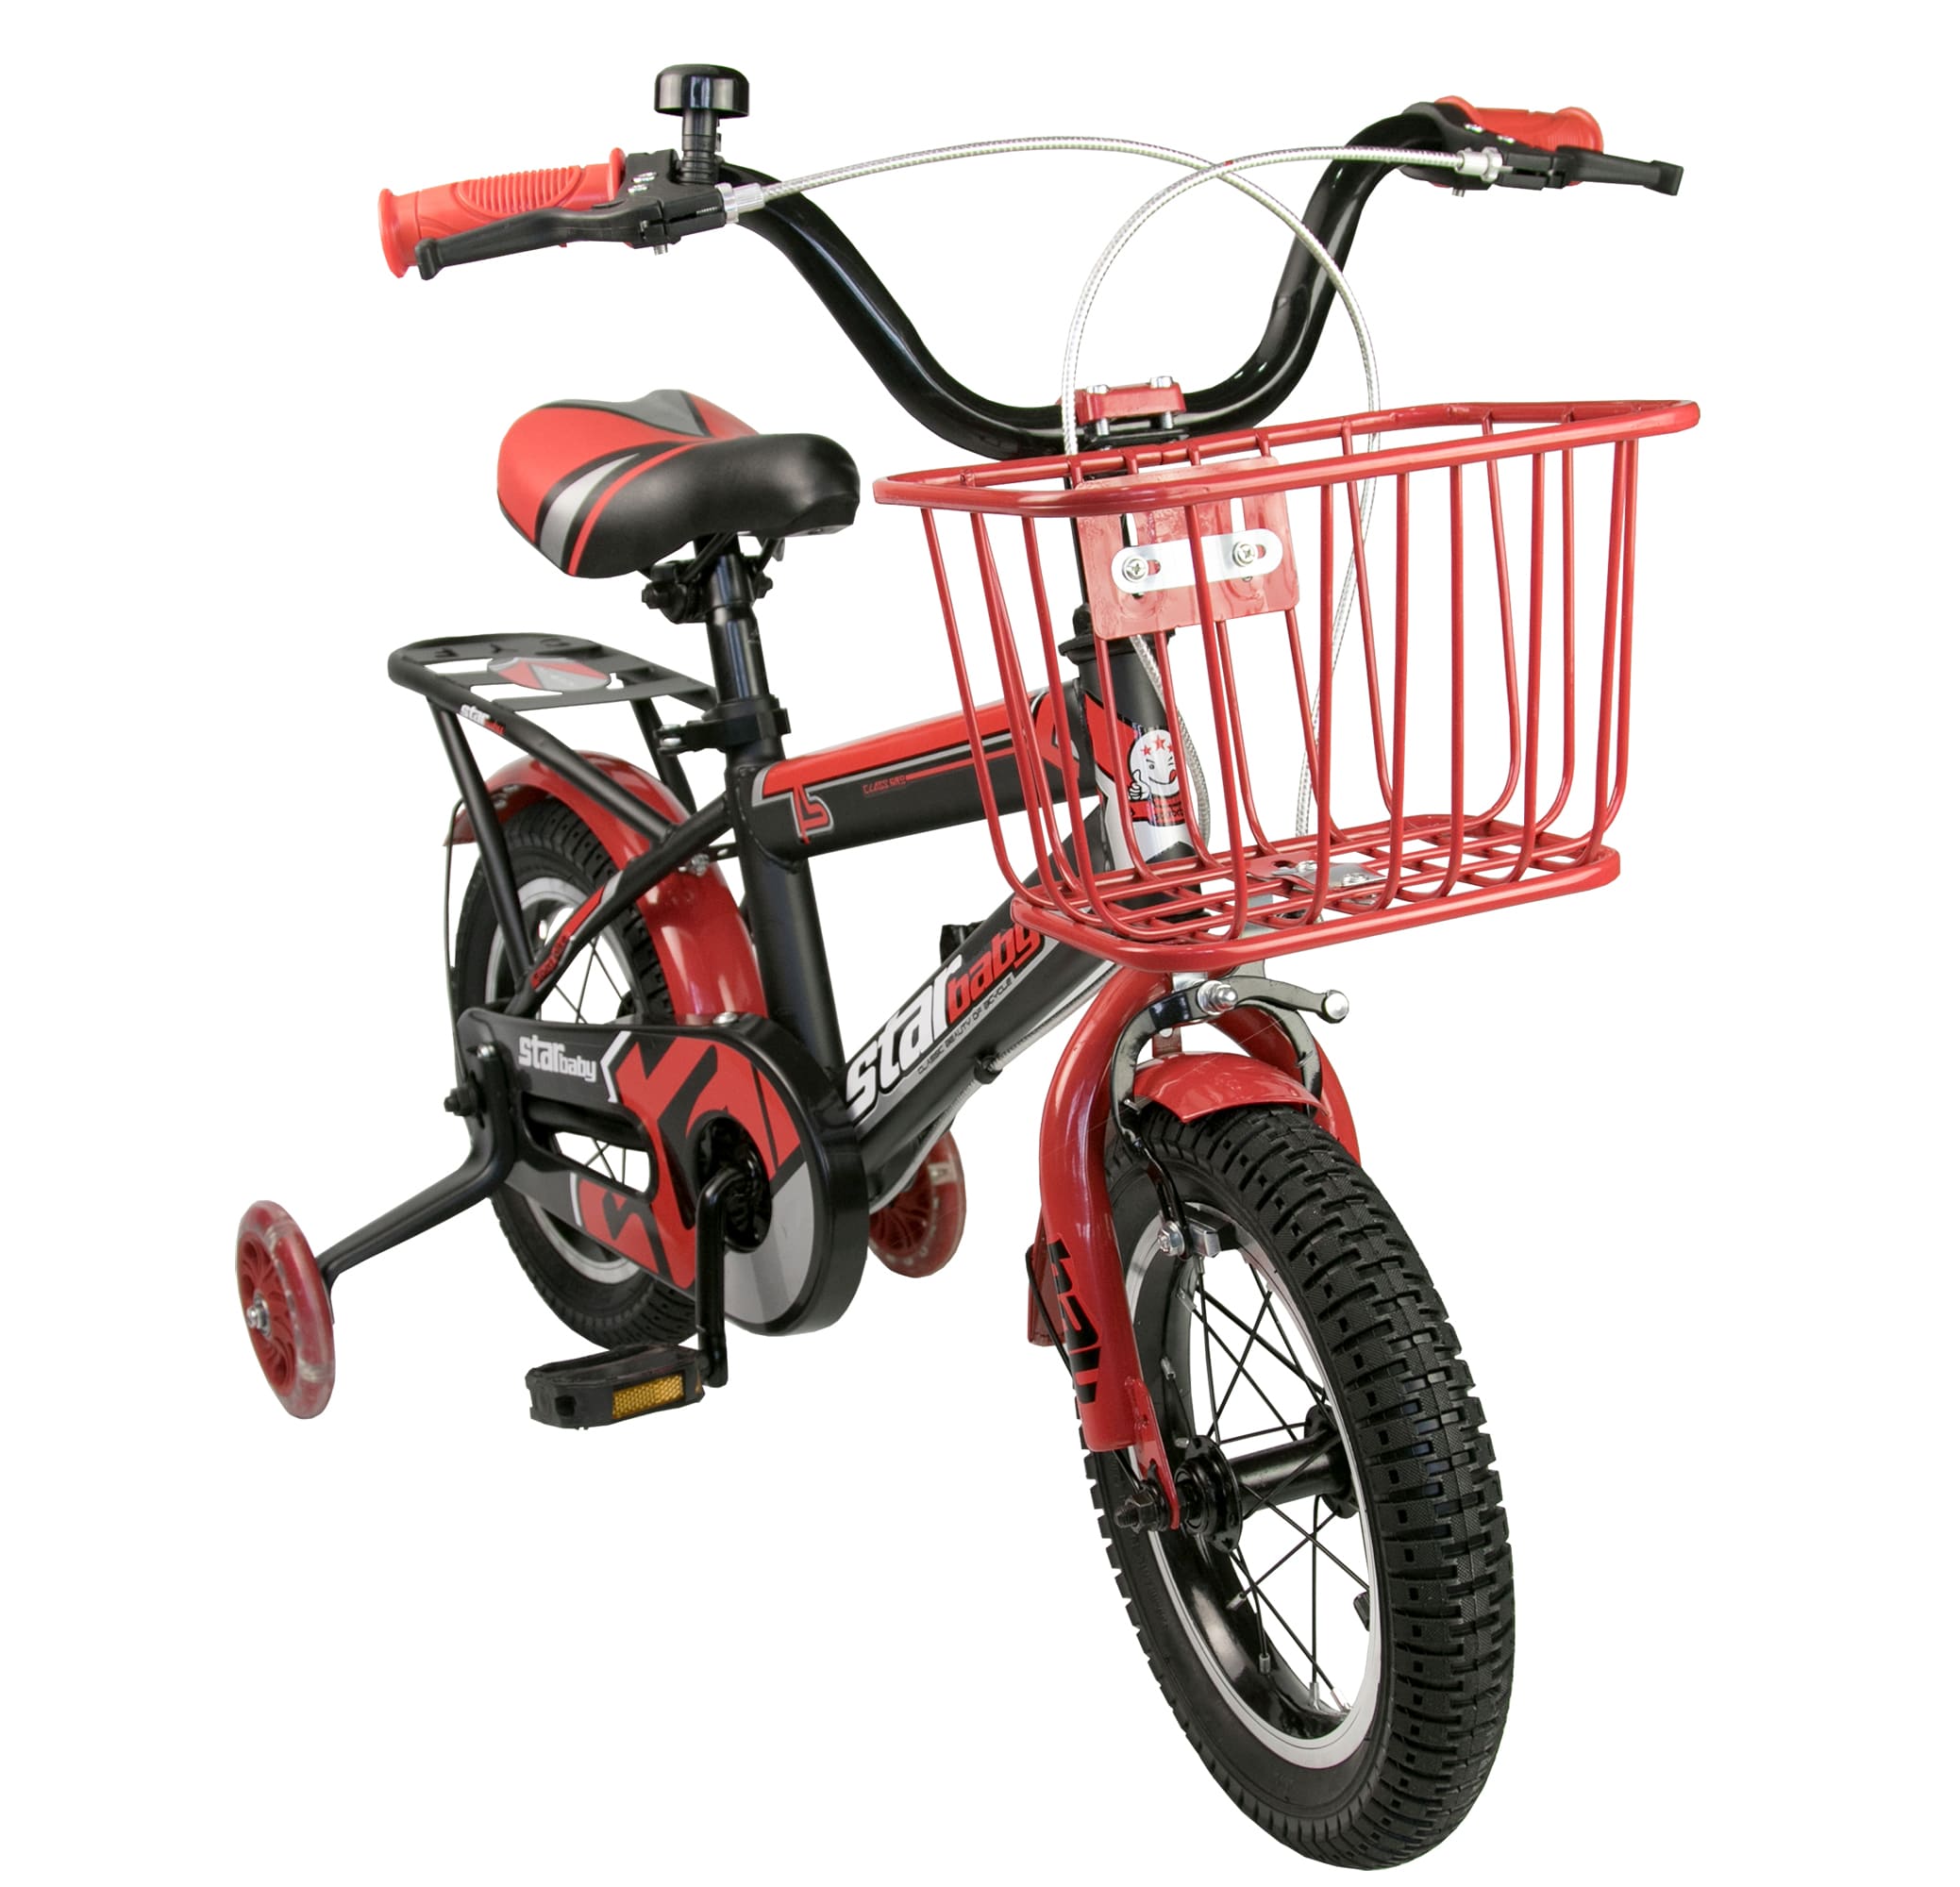 Bicicleta Infantil Topo Gigio 16 Pulgadas 5 - 7 Años con Ofertas